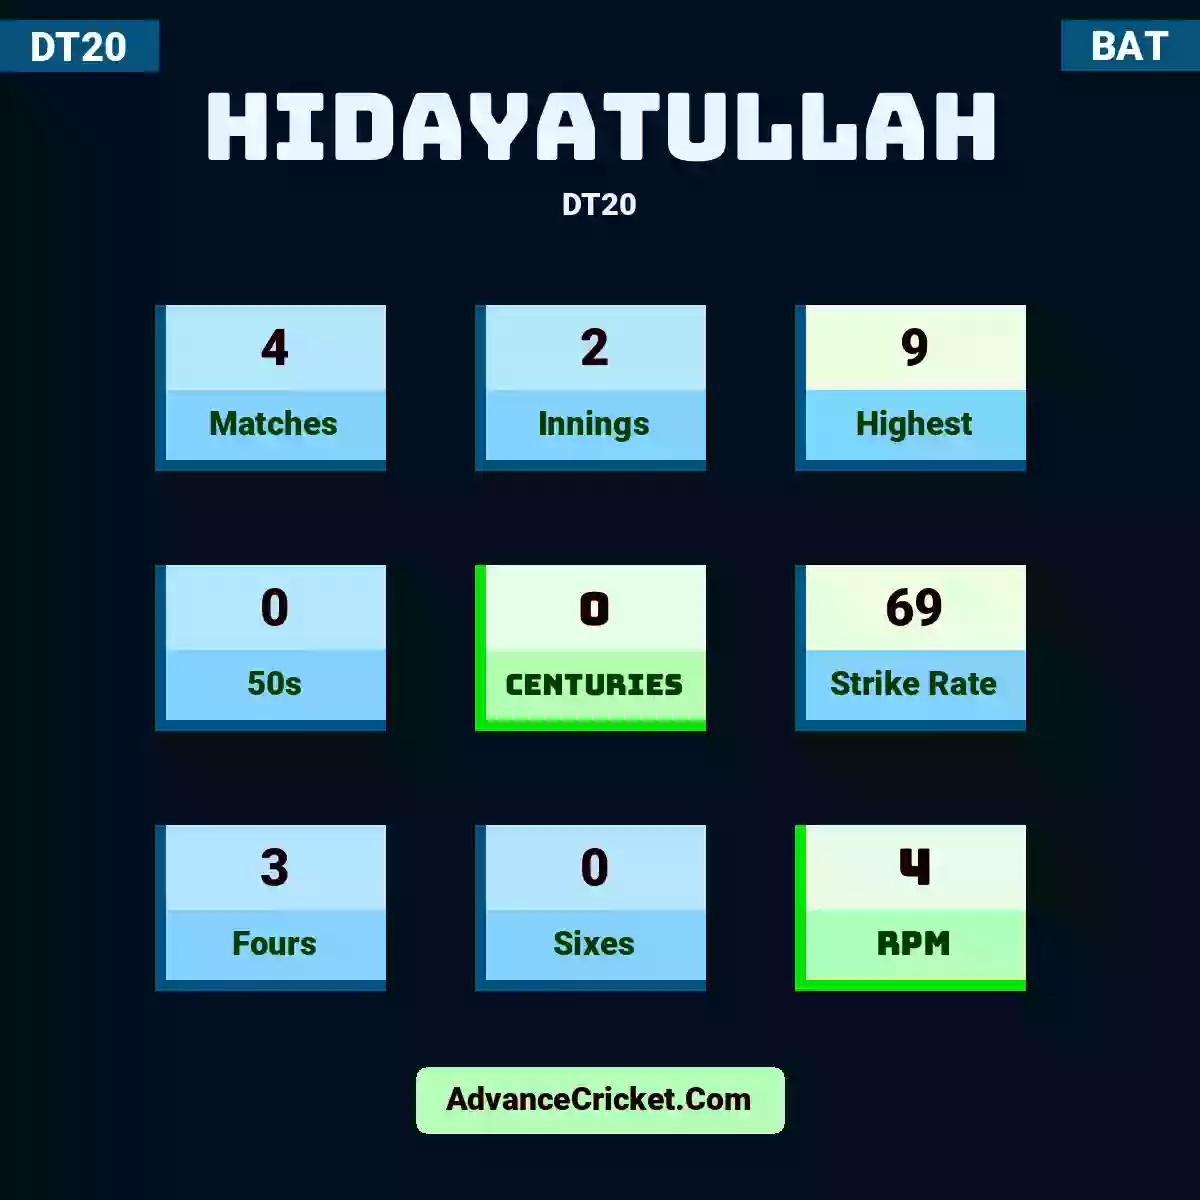 Hidayatullah DT20 , Hidayatullah played 4 matches, scored 9 runs as highest, 0 half-centuries, and 0 centuries, with a strike rate of 69. H.Hidayatullah hit 3 fours and 0 sixes, with an RPM of 4.